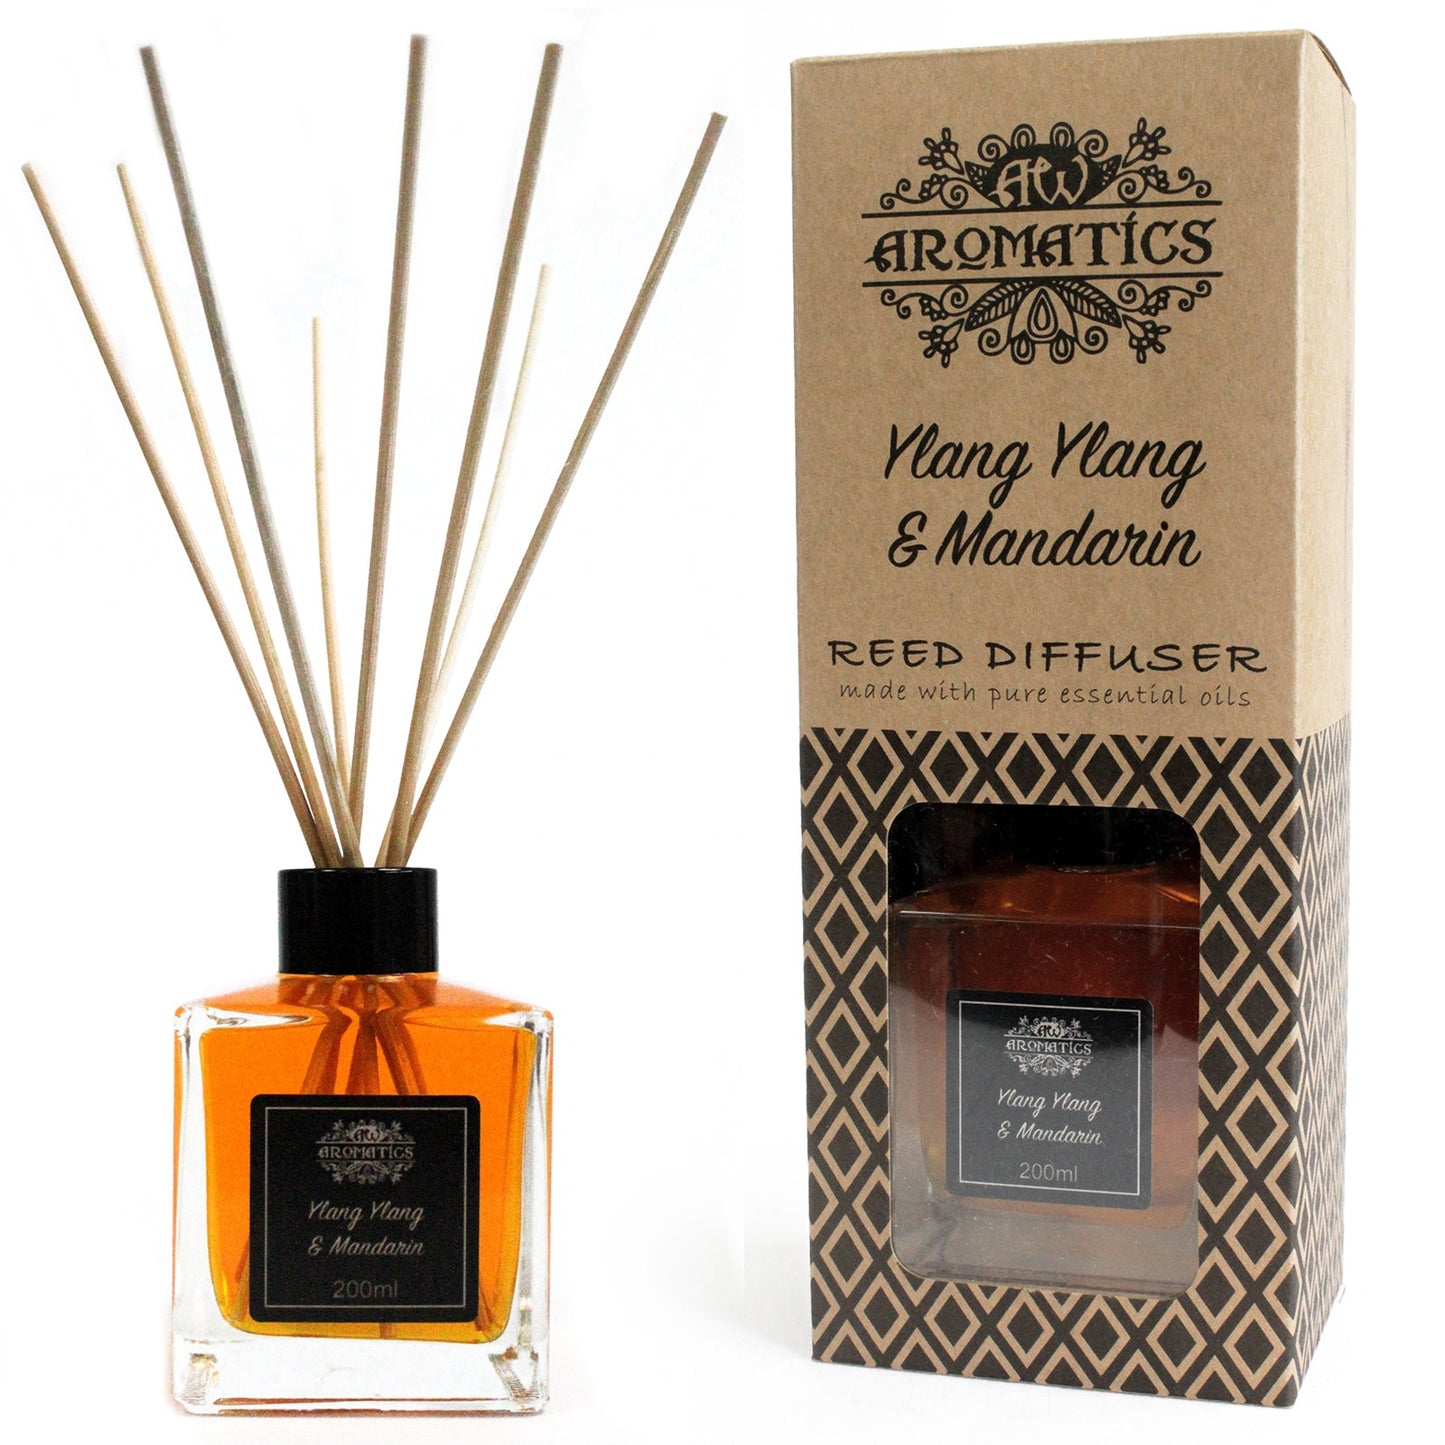 Luxury Essential Oils Reed Diffuser - Various Blends Pure Essential Oils Reed Diffusers Soul Inspired Ylang Ylang & Mandarin 